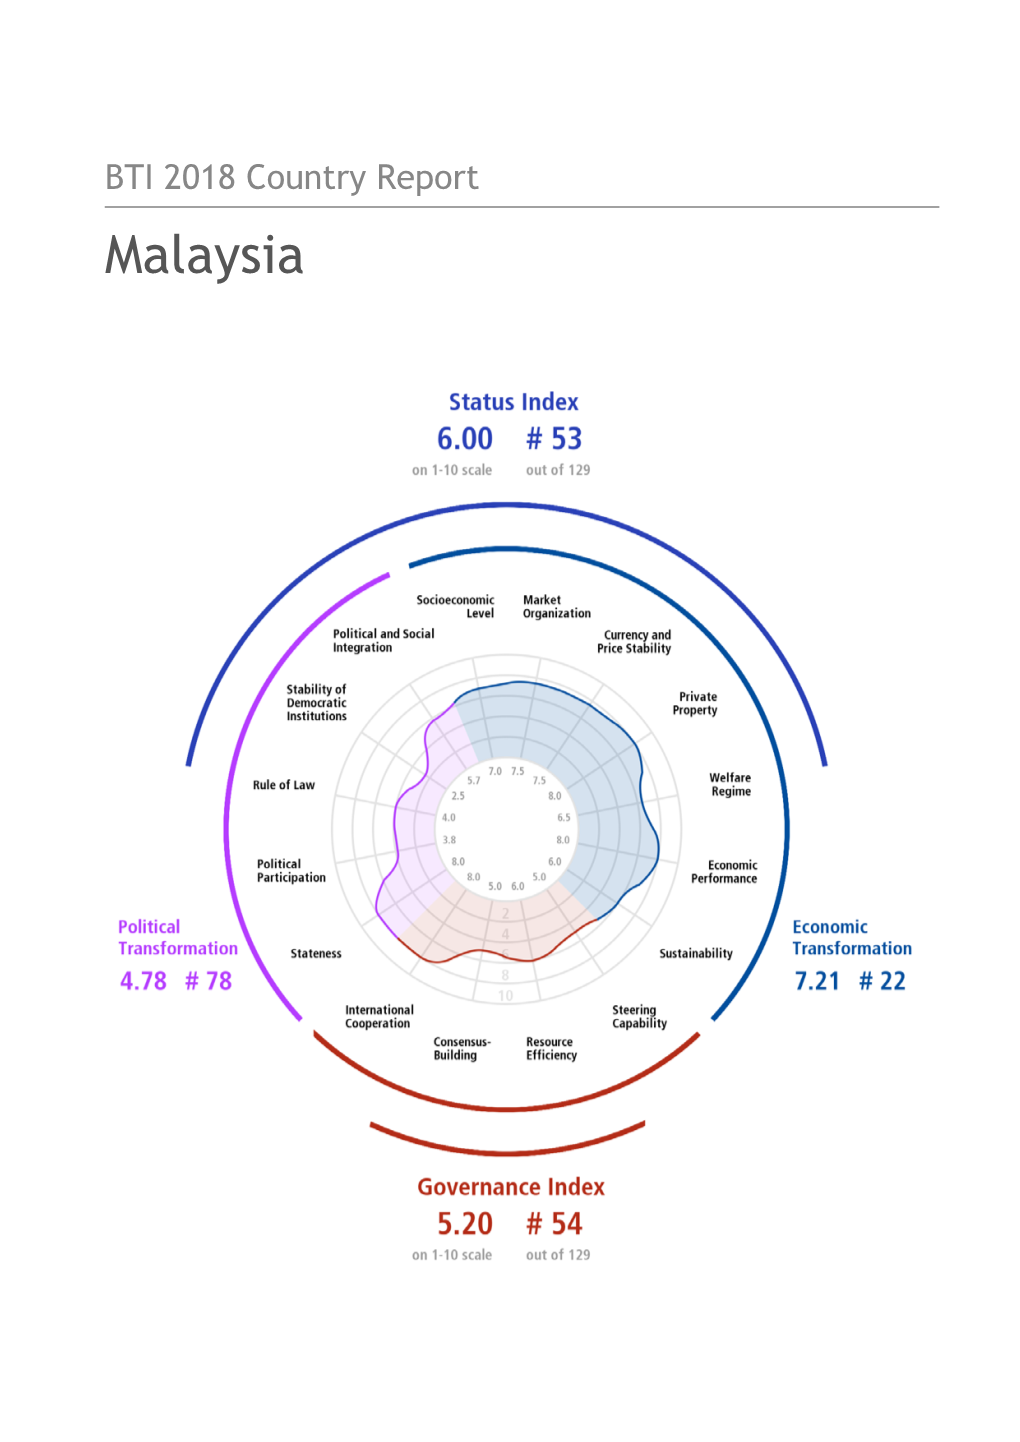 BTI 2018 Country Report Malaysia